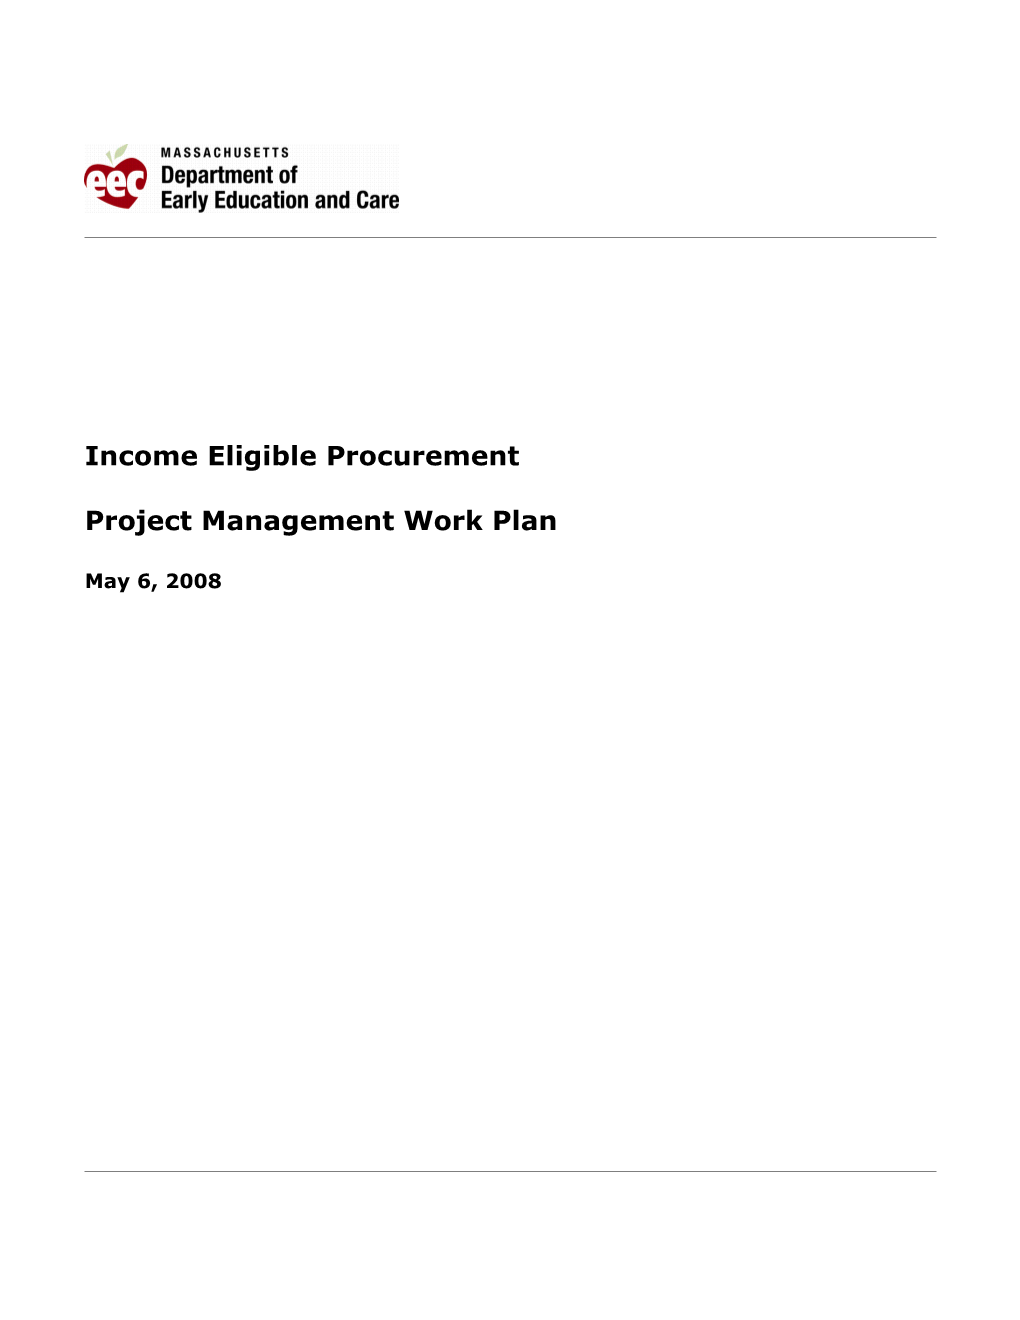 Project Management Work Plan